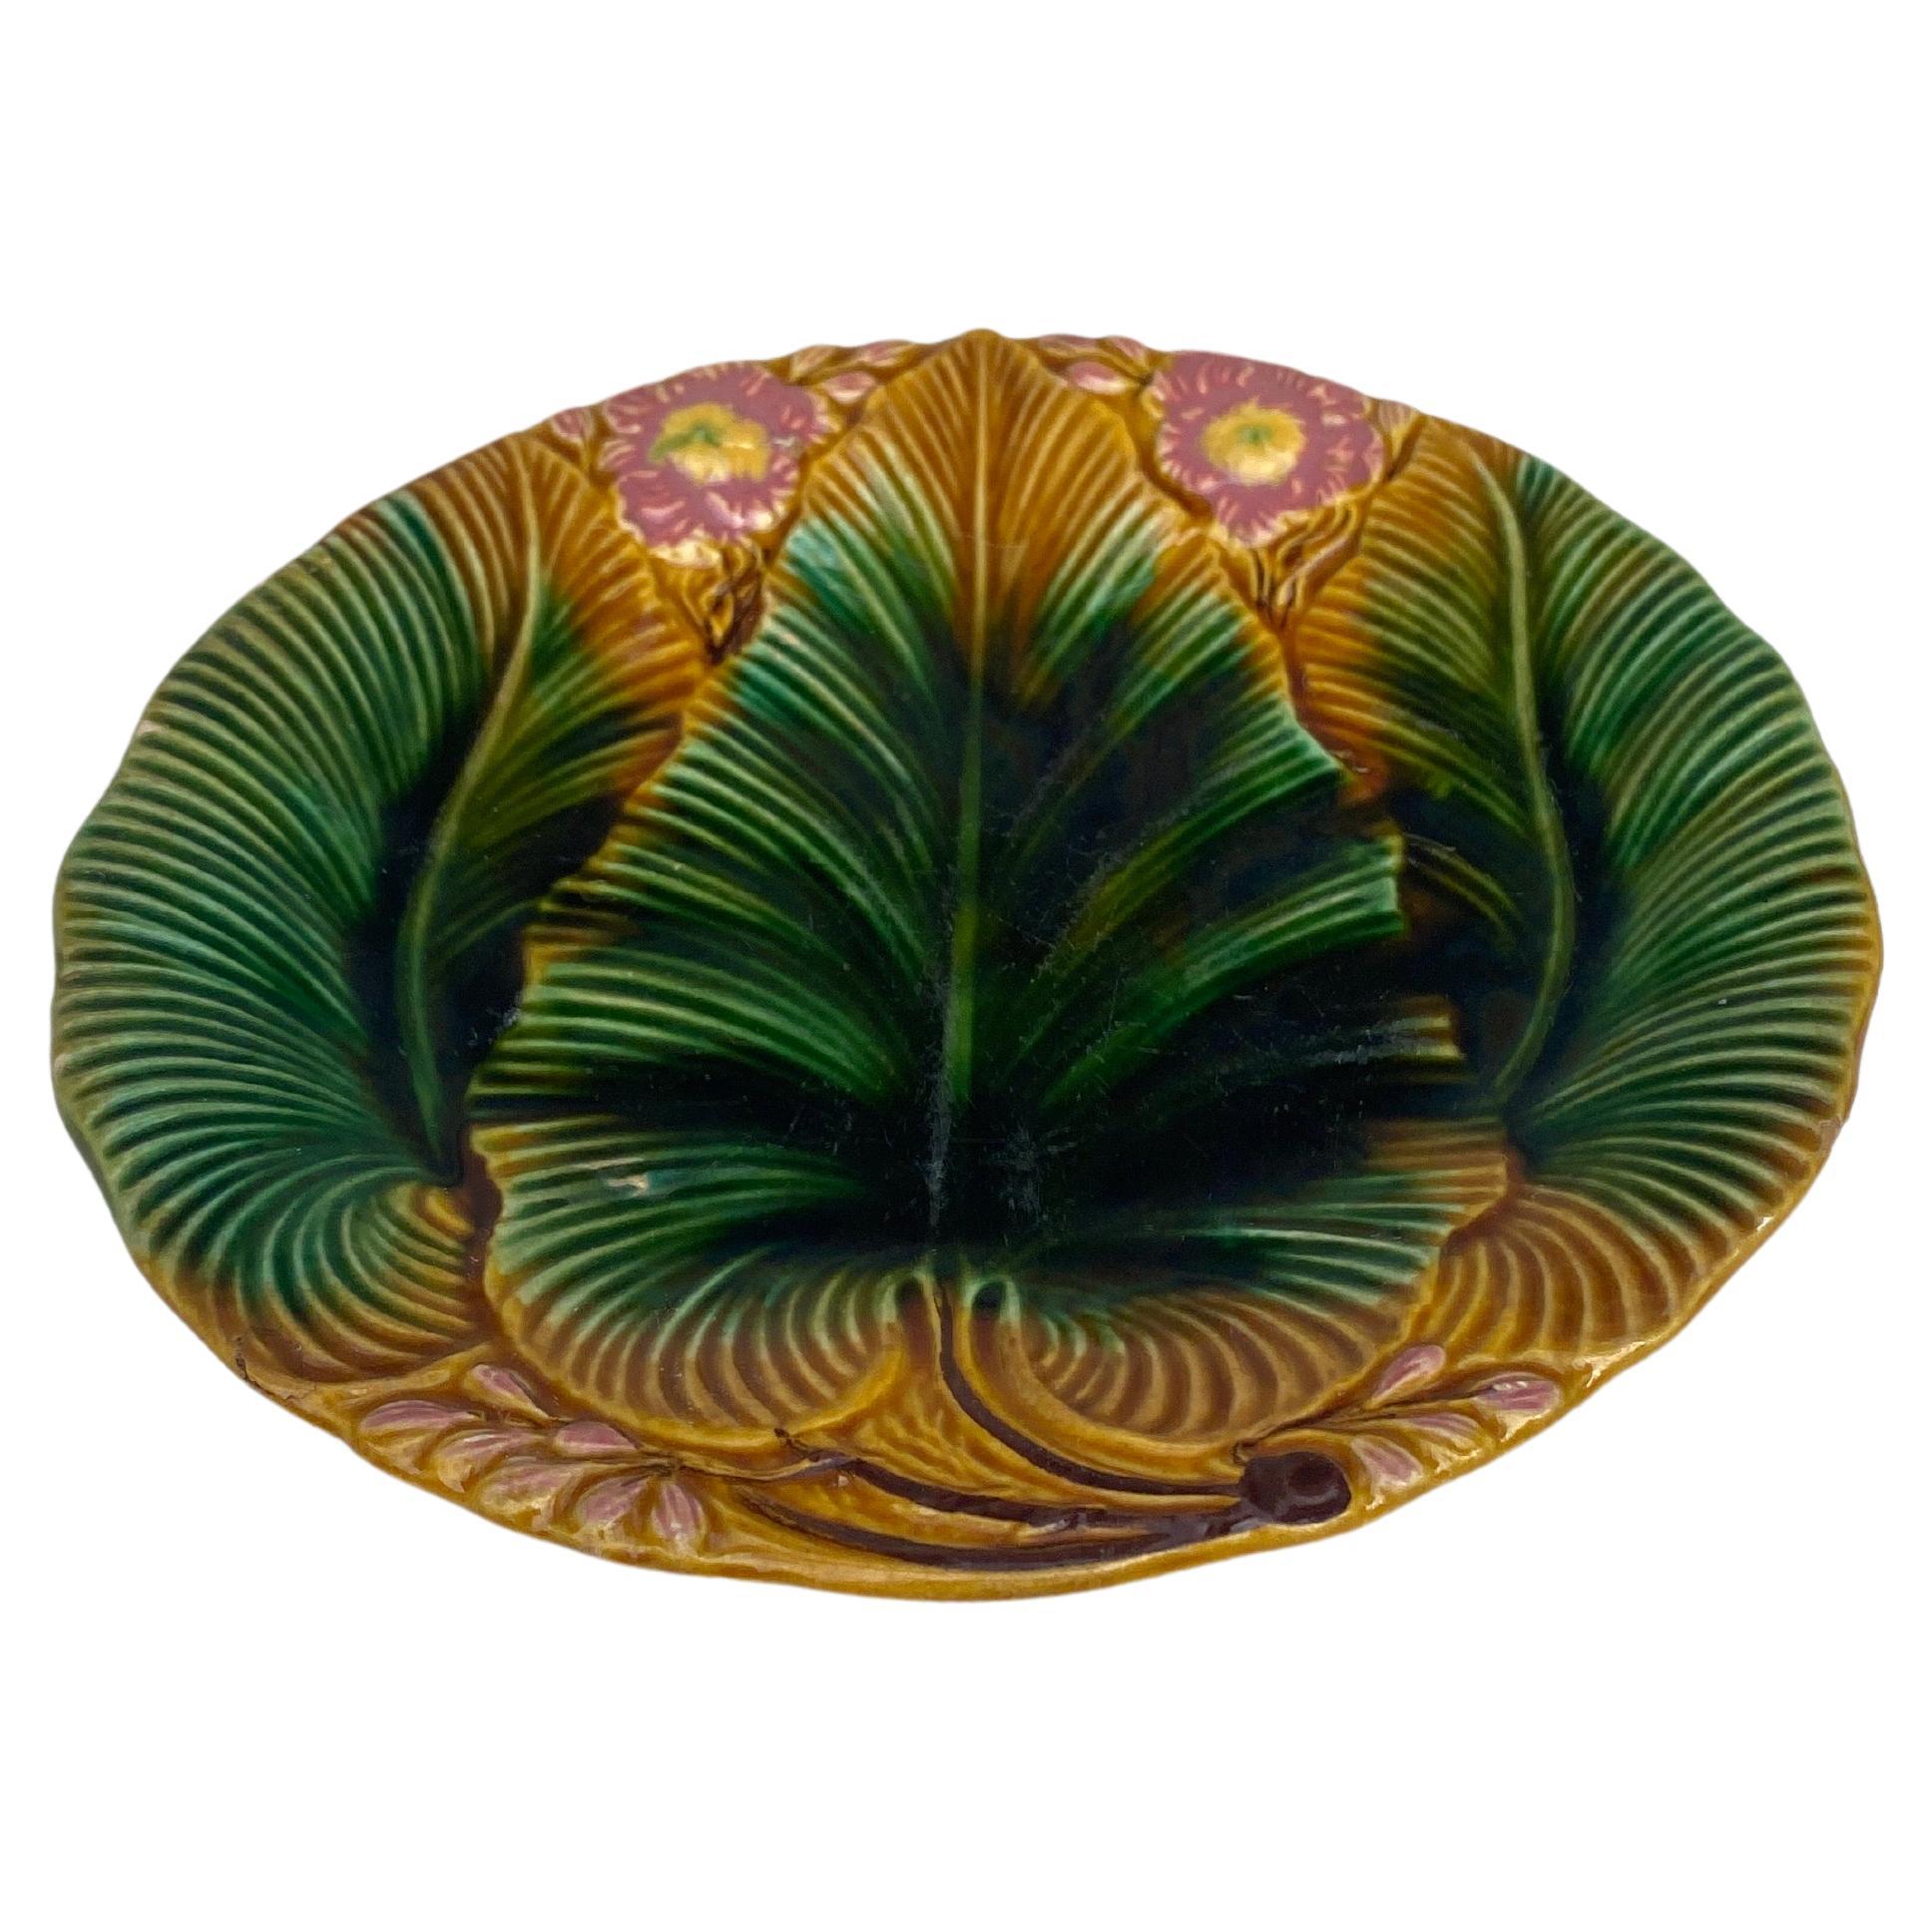 Majolica palm leaf plate signed Villeroy & Boch, circa 1890.